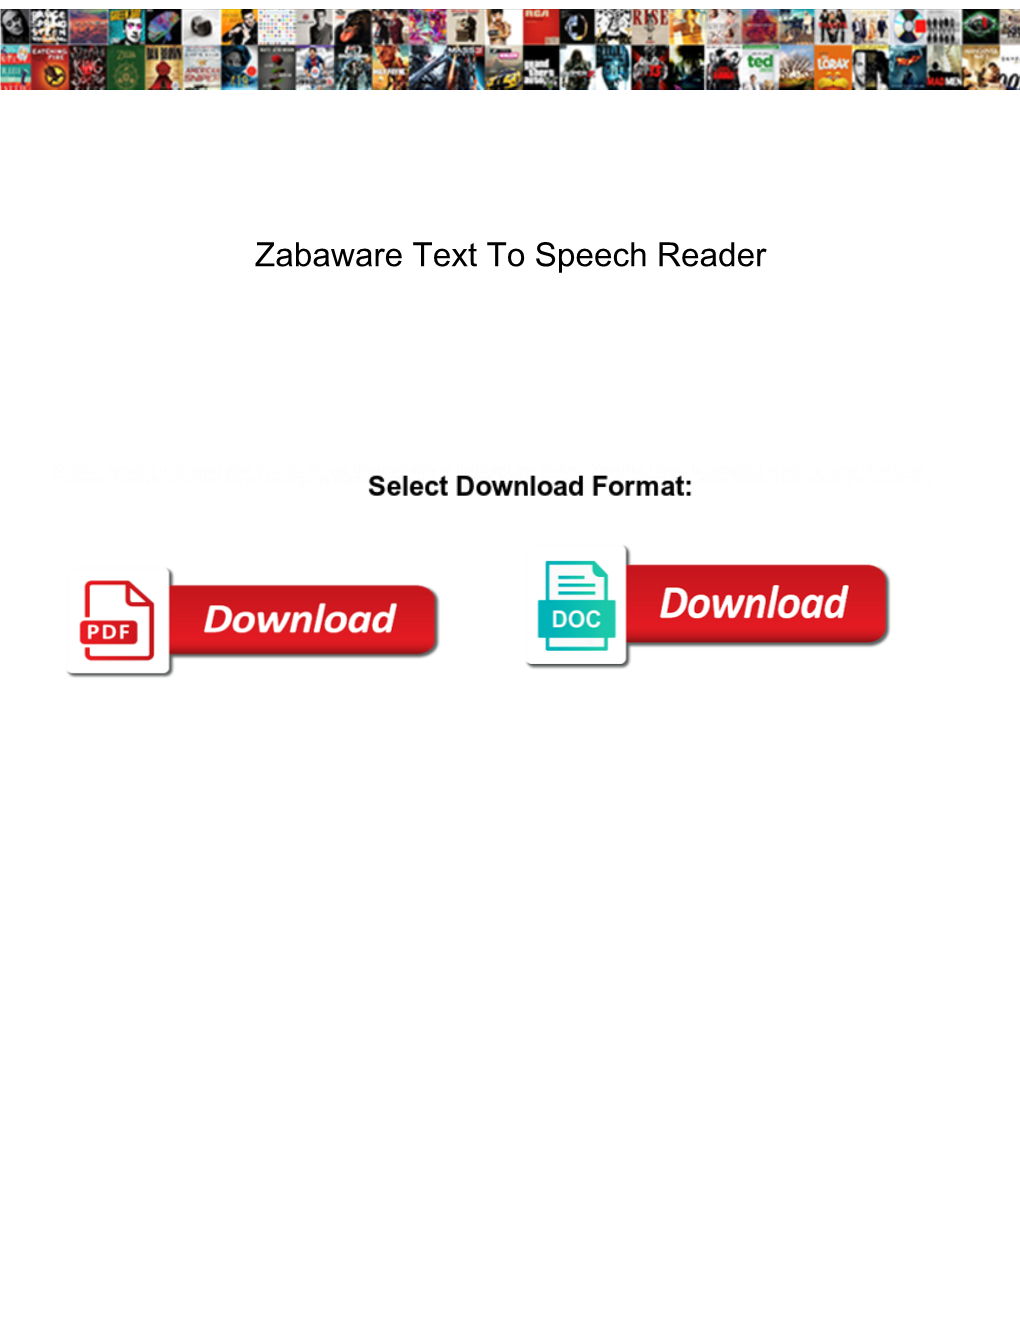 Zabaware Text to Speech Reader